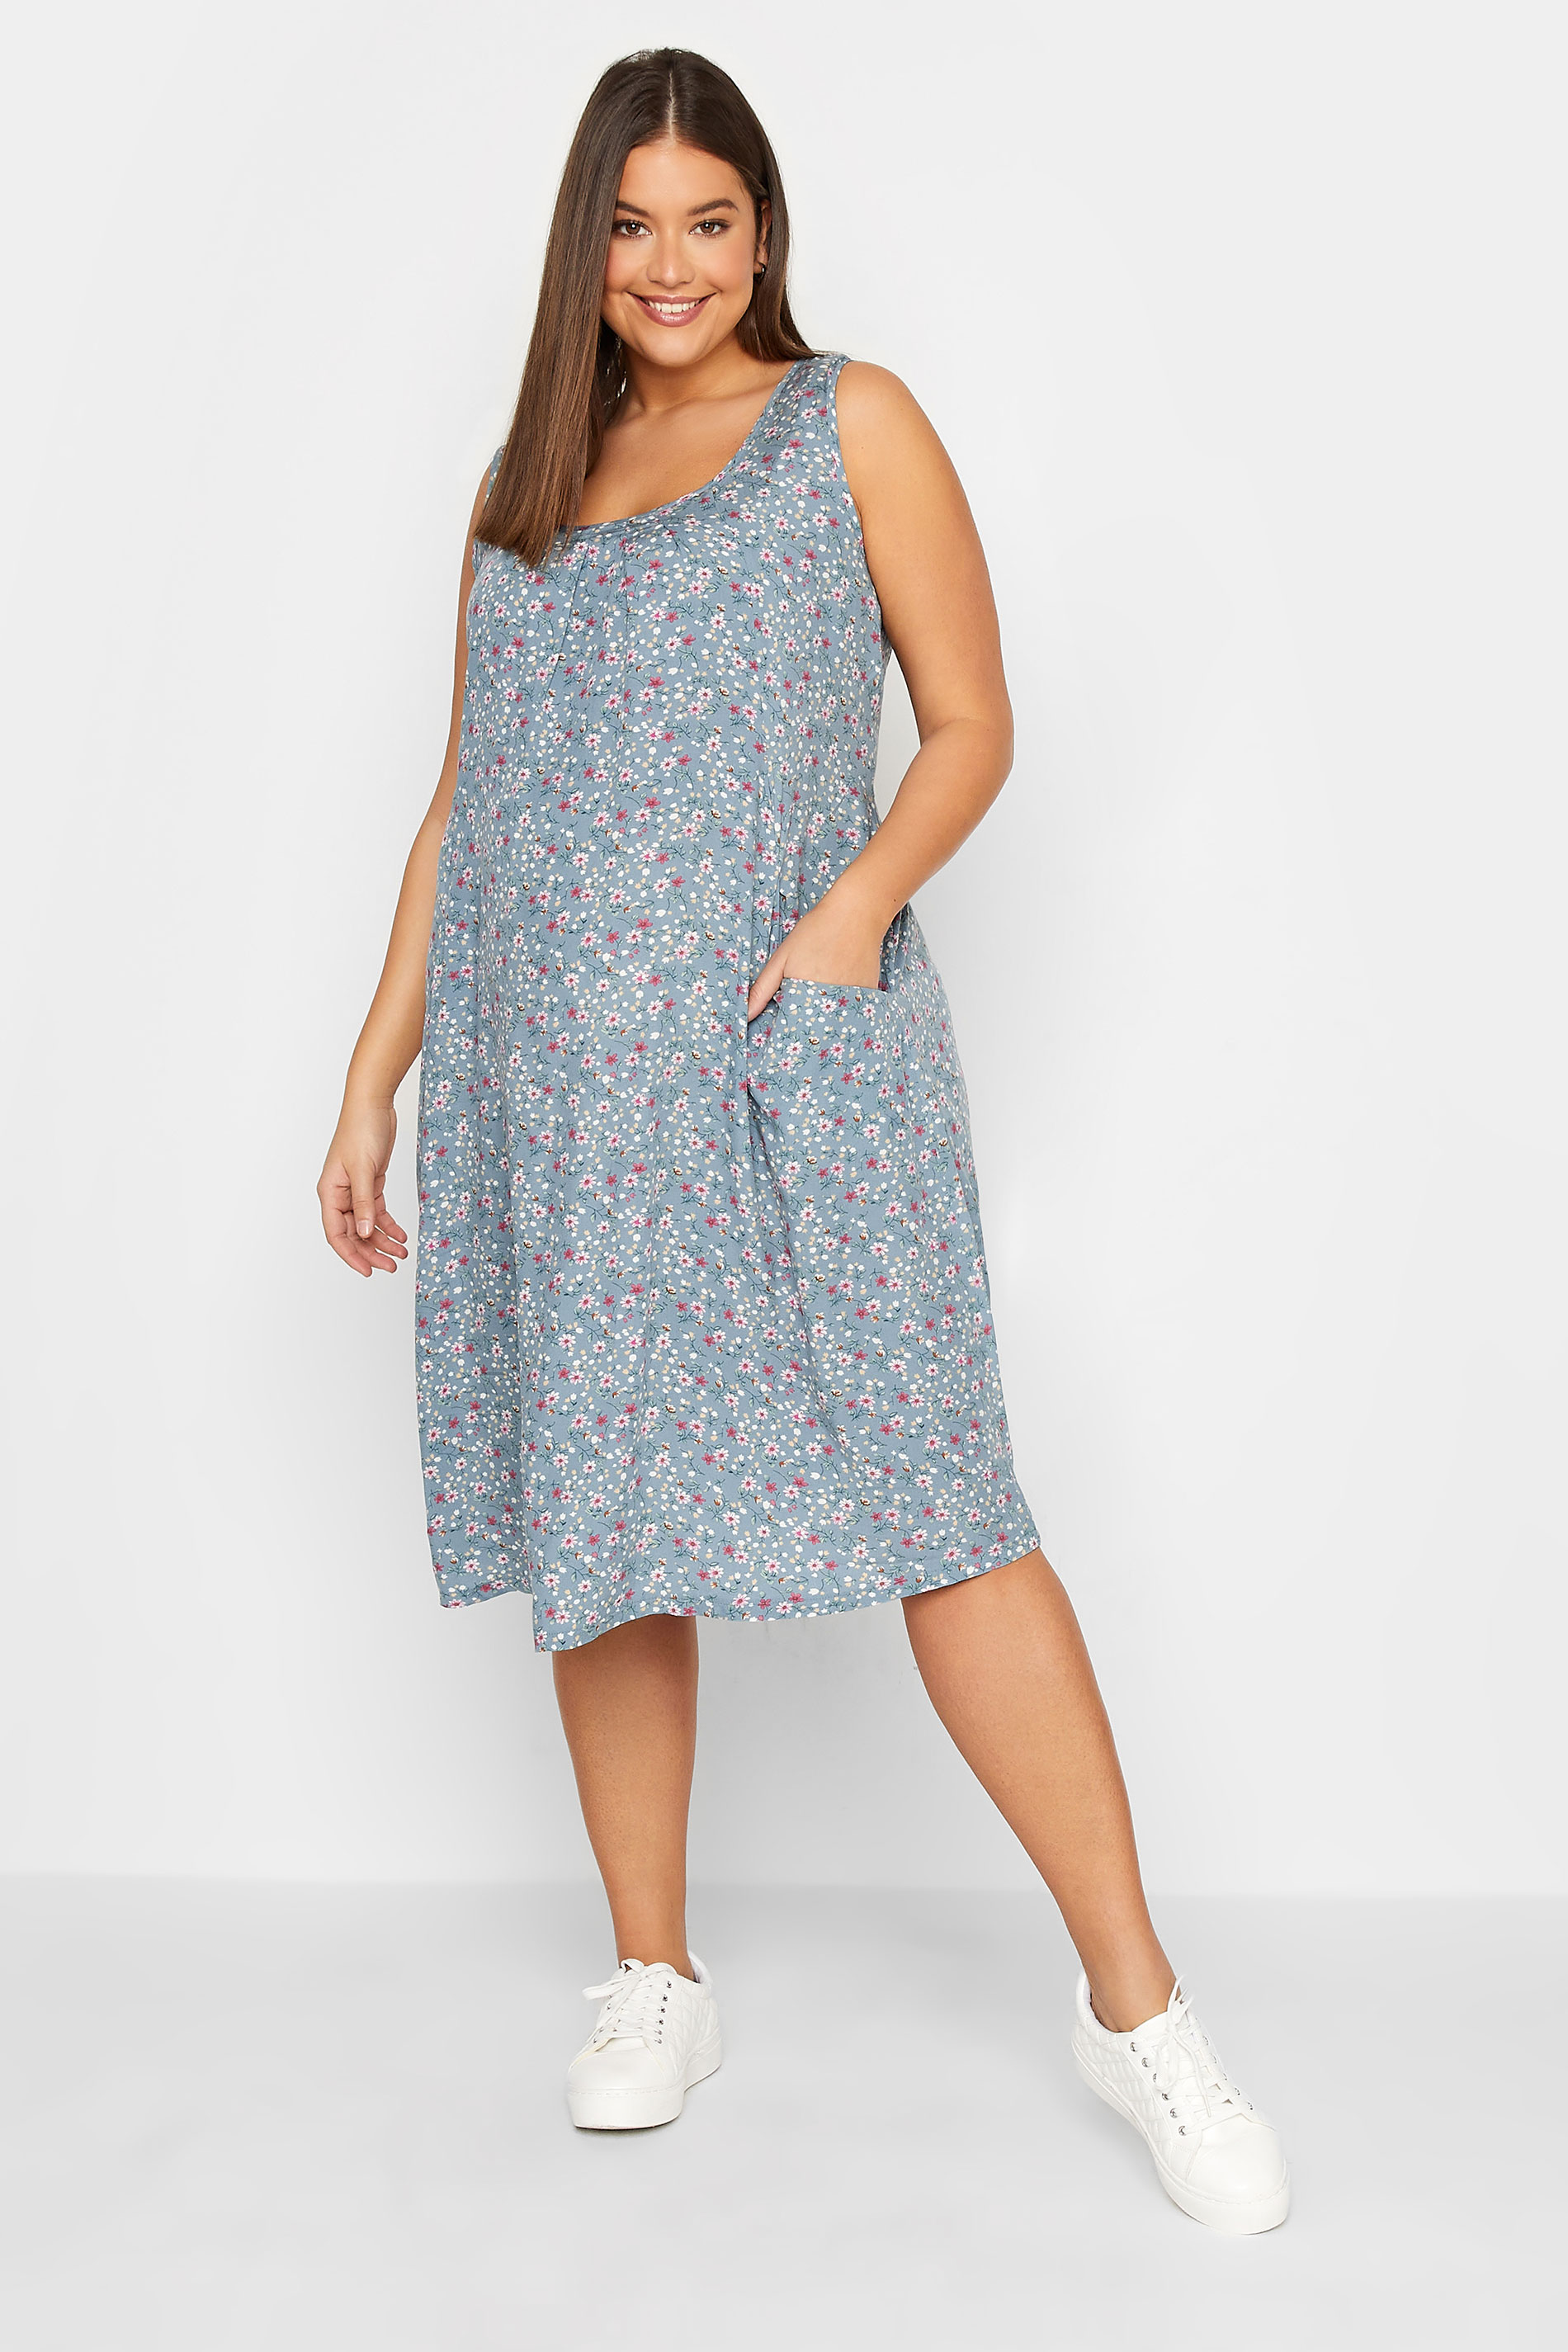 LTS Maternity Blue Floral Sleeveless Dress | Long Tall Sally 2